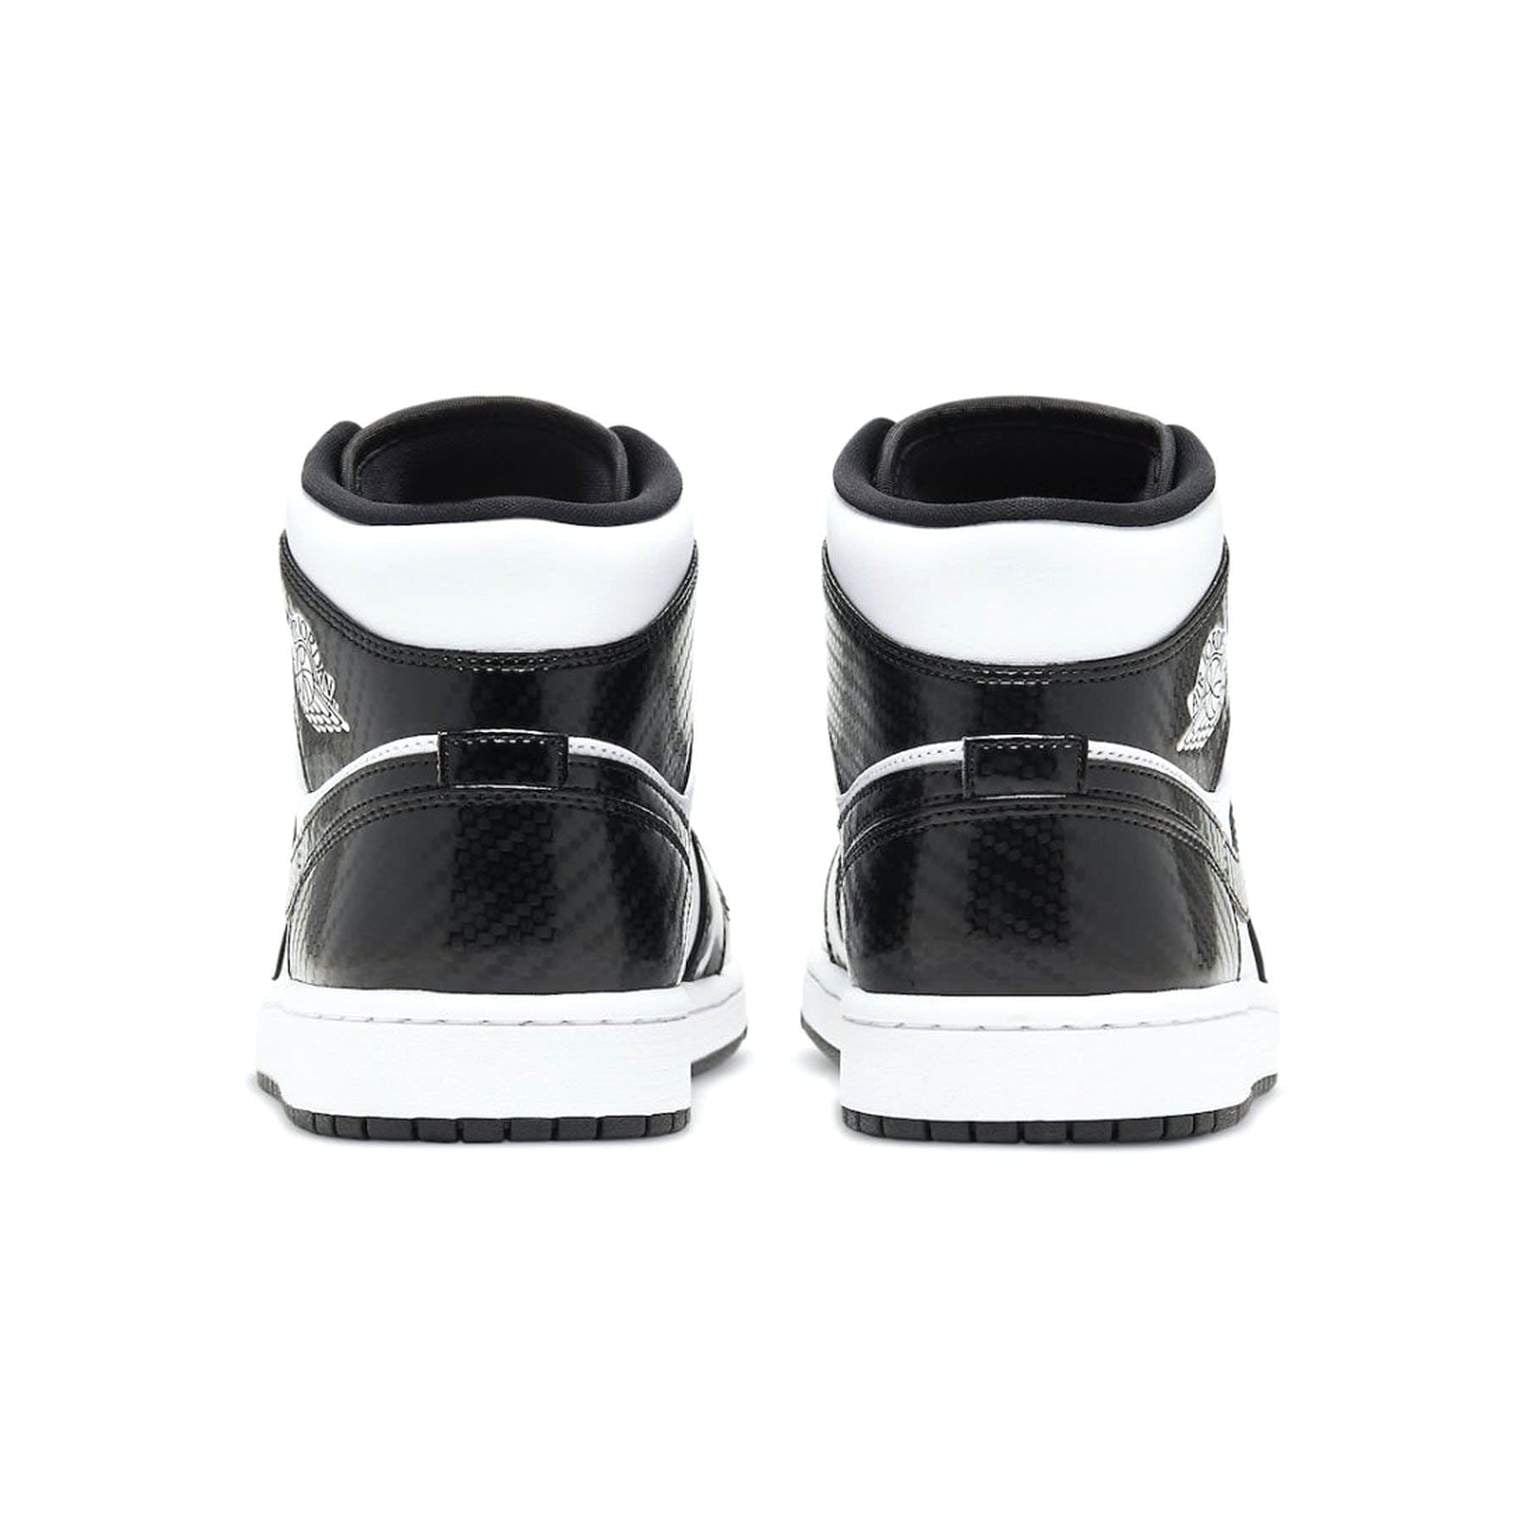 Double Boxed  339.99 Nike Air Jordan 1 Mid Carbon Fibre Black All Star Double Boxed